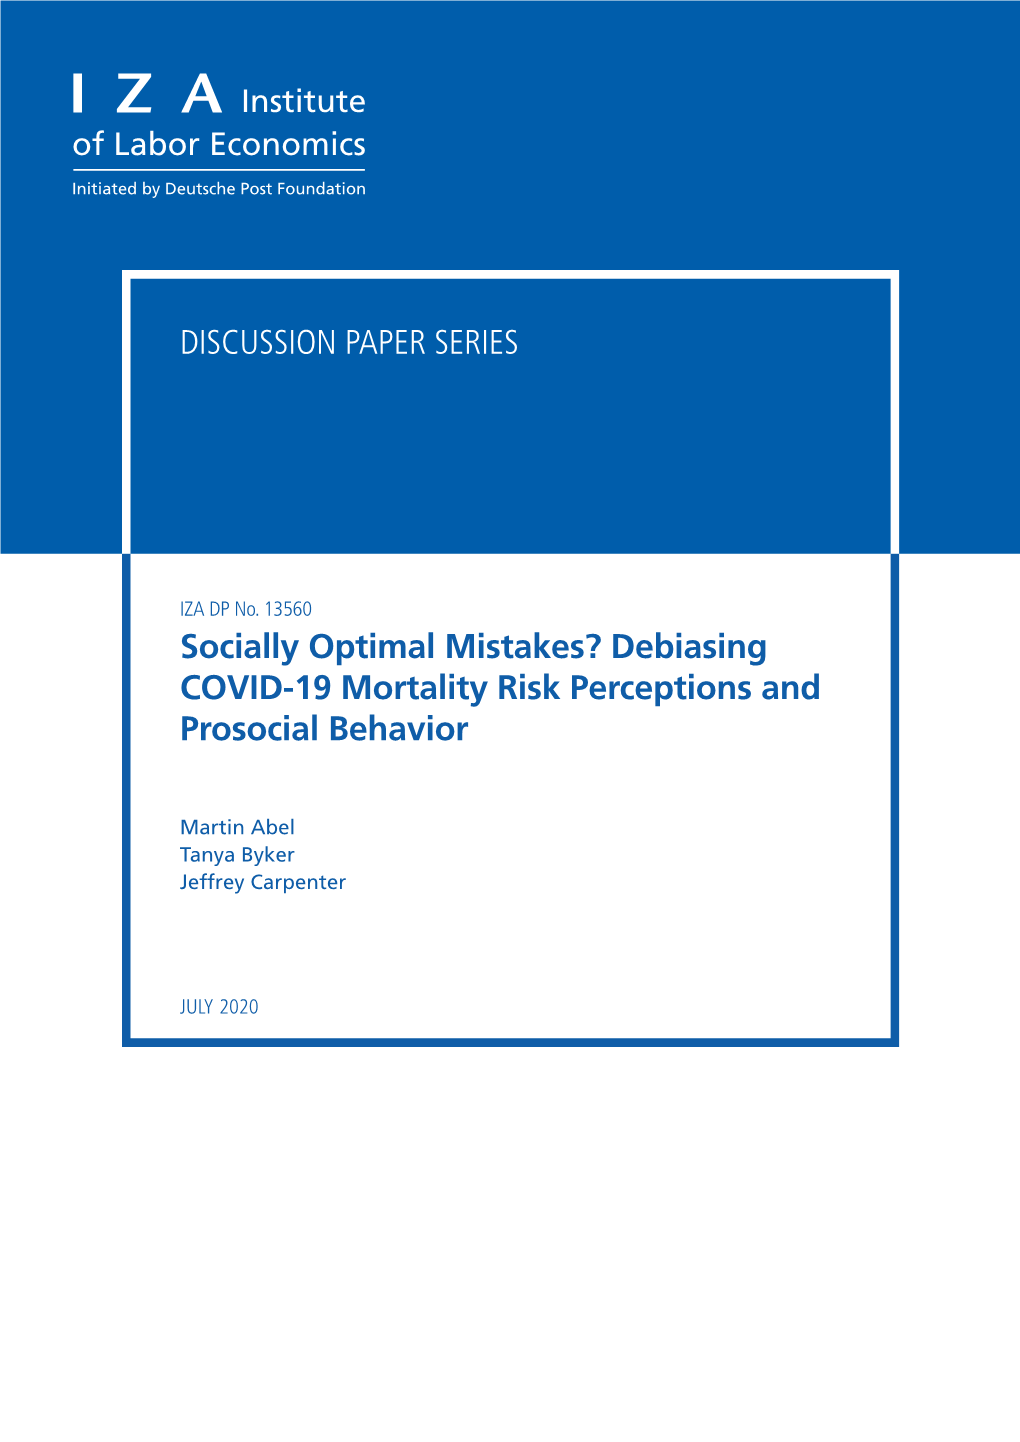 Debiasing COVID-19 Mortality Risk Perceptions and Prosocial Behavior